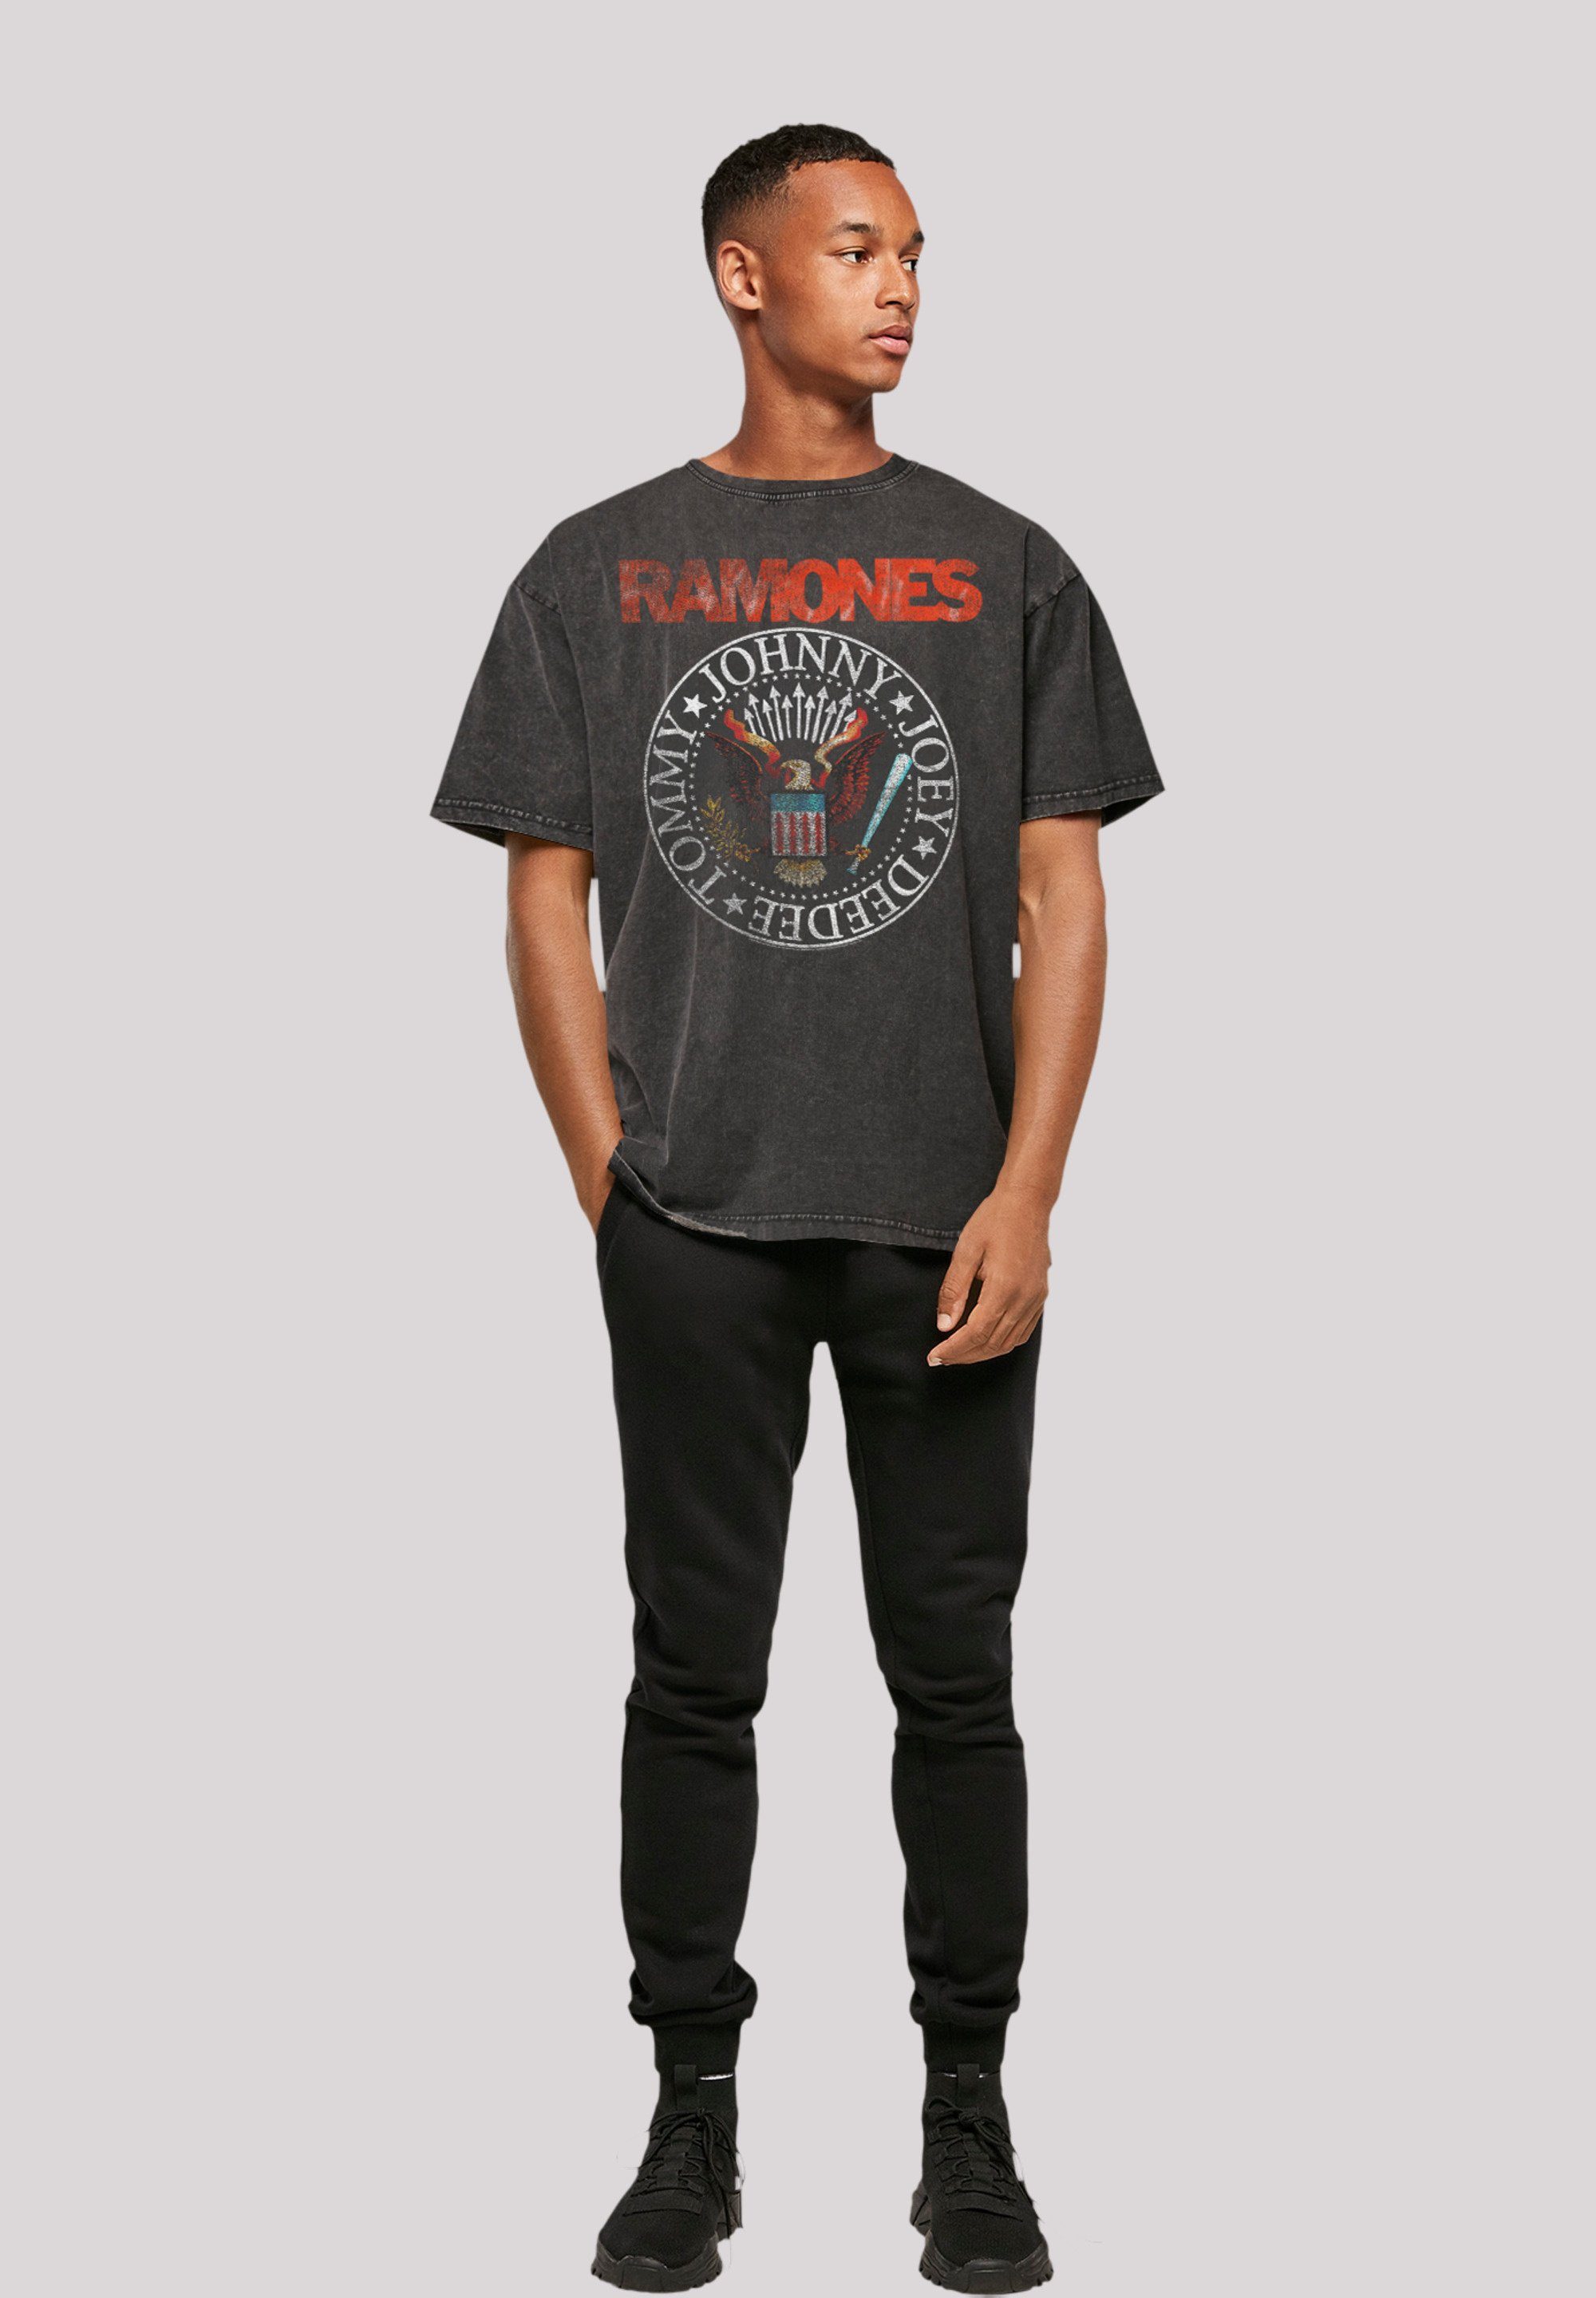 F4NT4STIC T-Shirt Band, EAGLE Ramones Qualität, Premium SEAL VINTAGE Rock-Musik Band Rock schwarz Musik